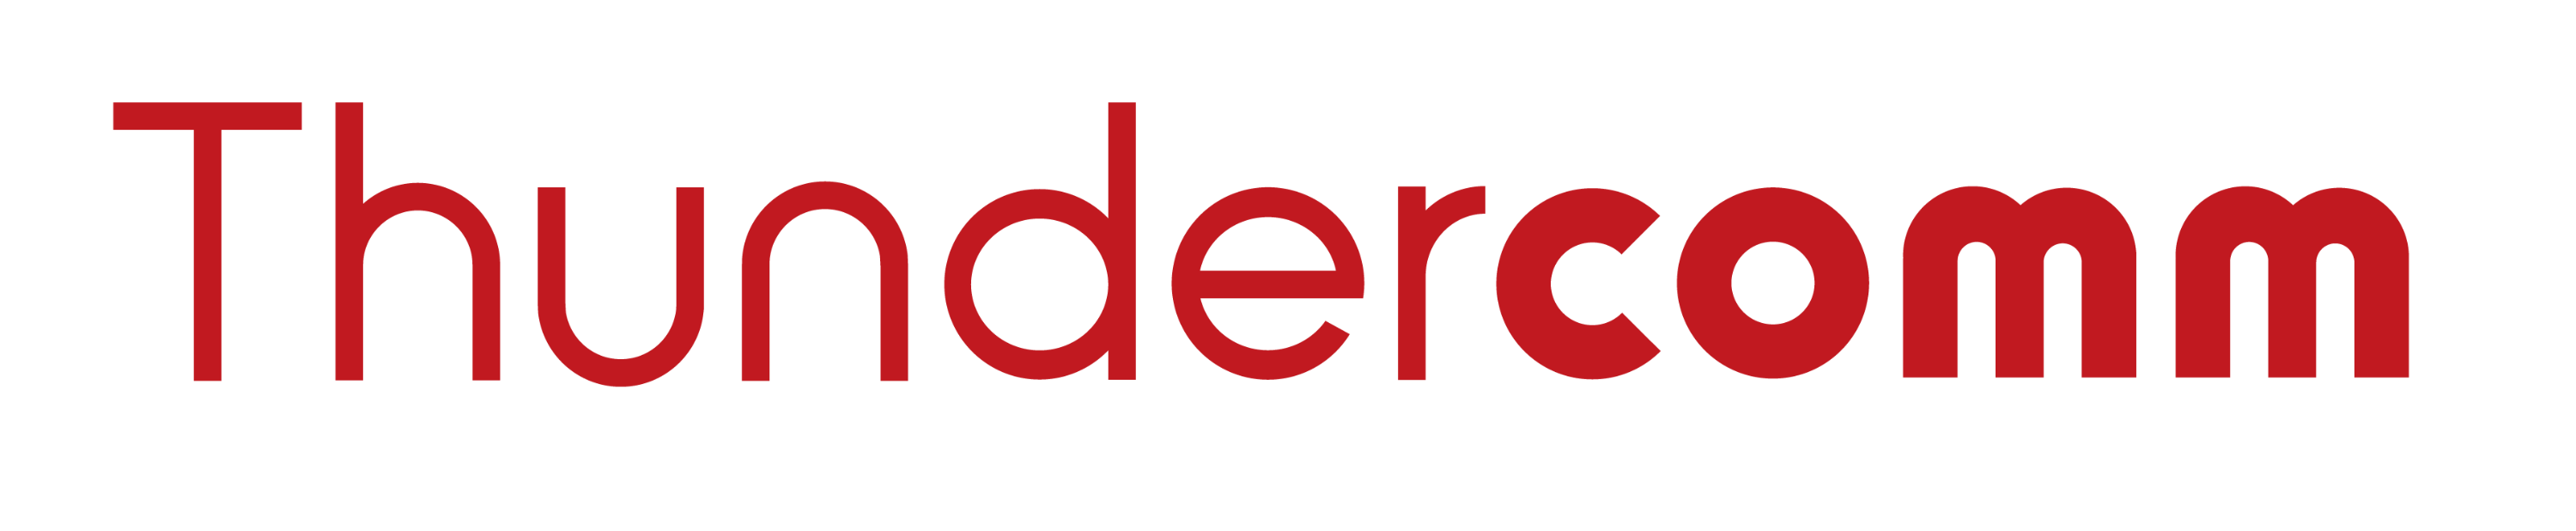 Logo THUNDERCOMM